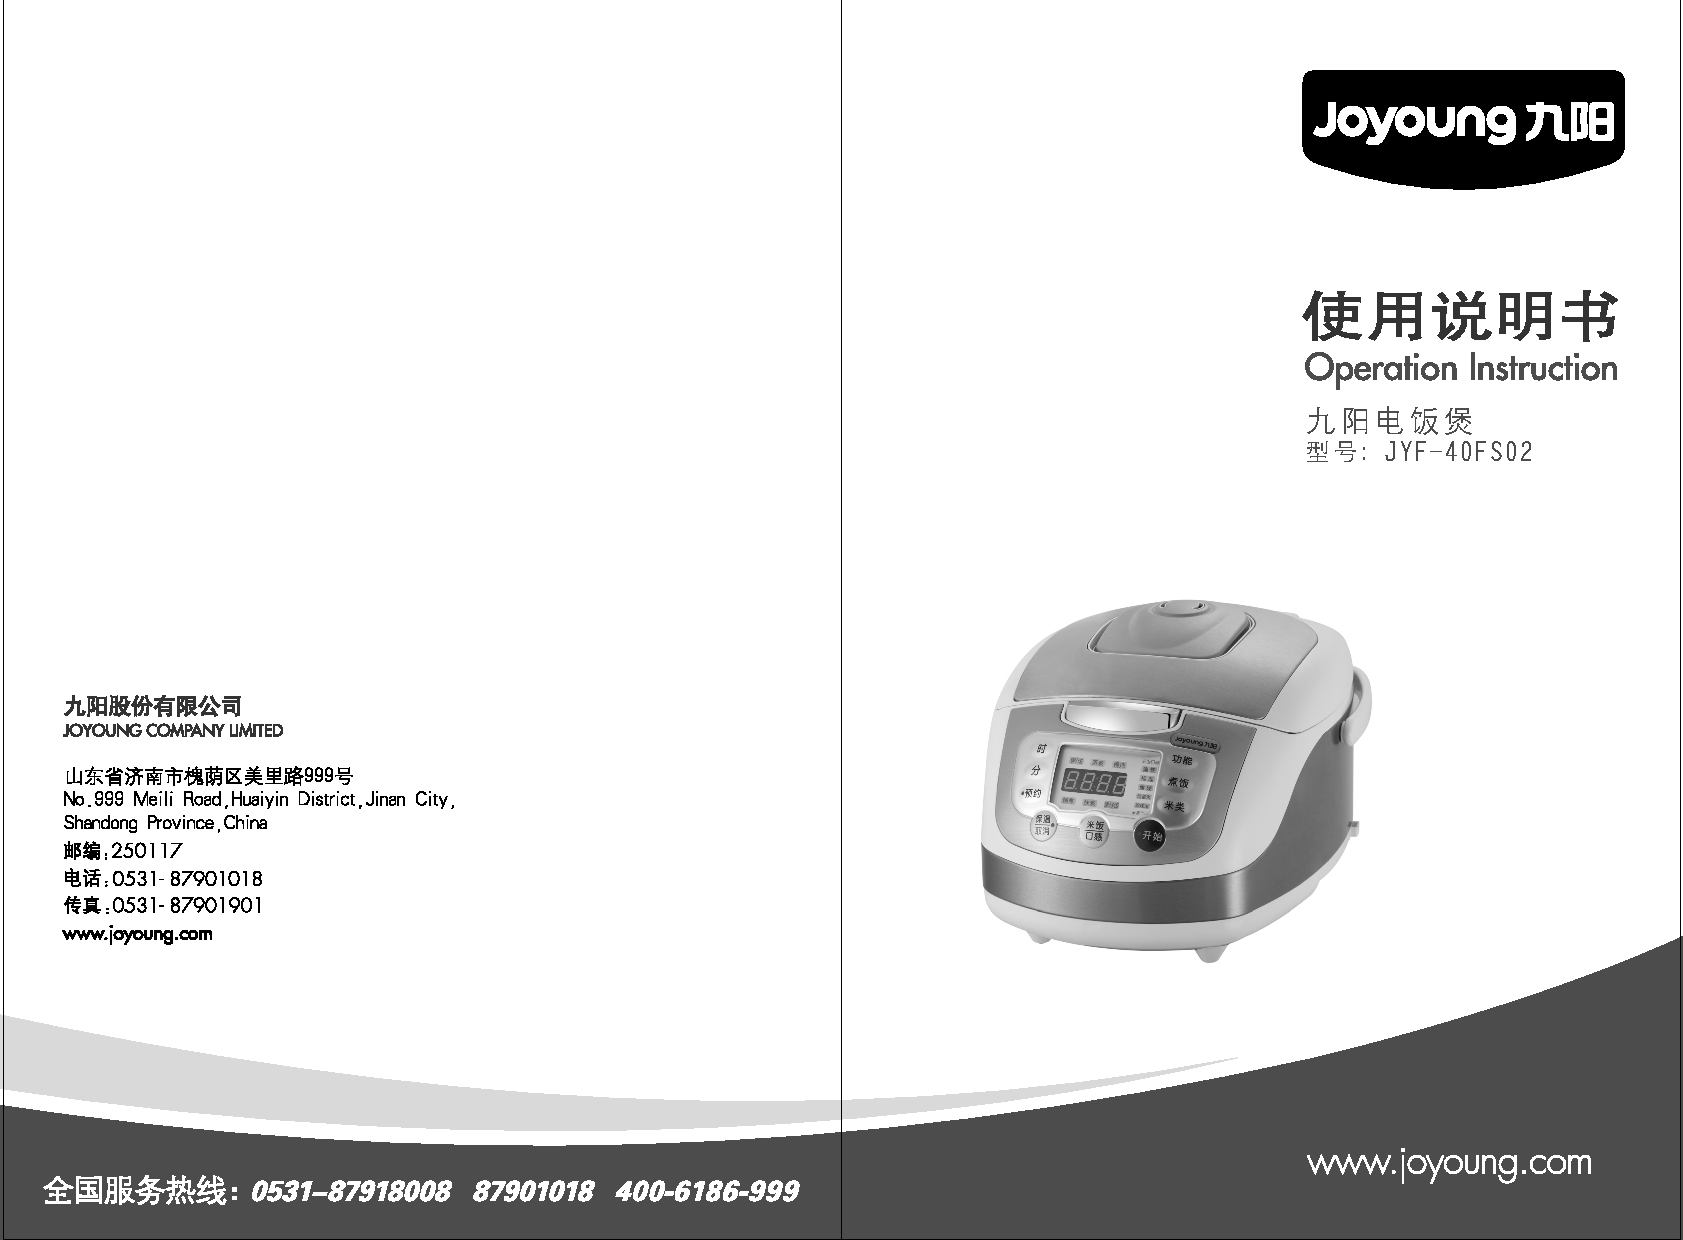 九阳 Joyyoung JYF-40FS02 使用说明书 封面